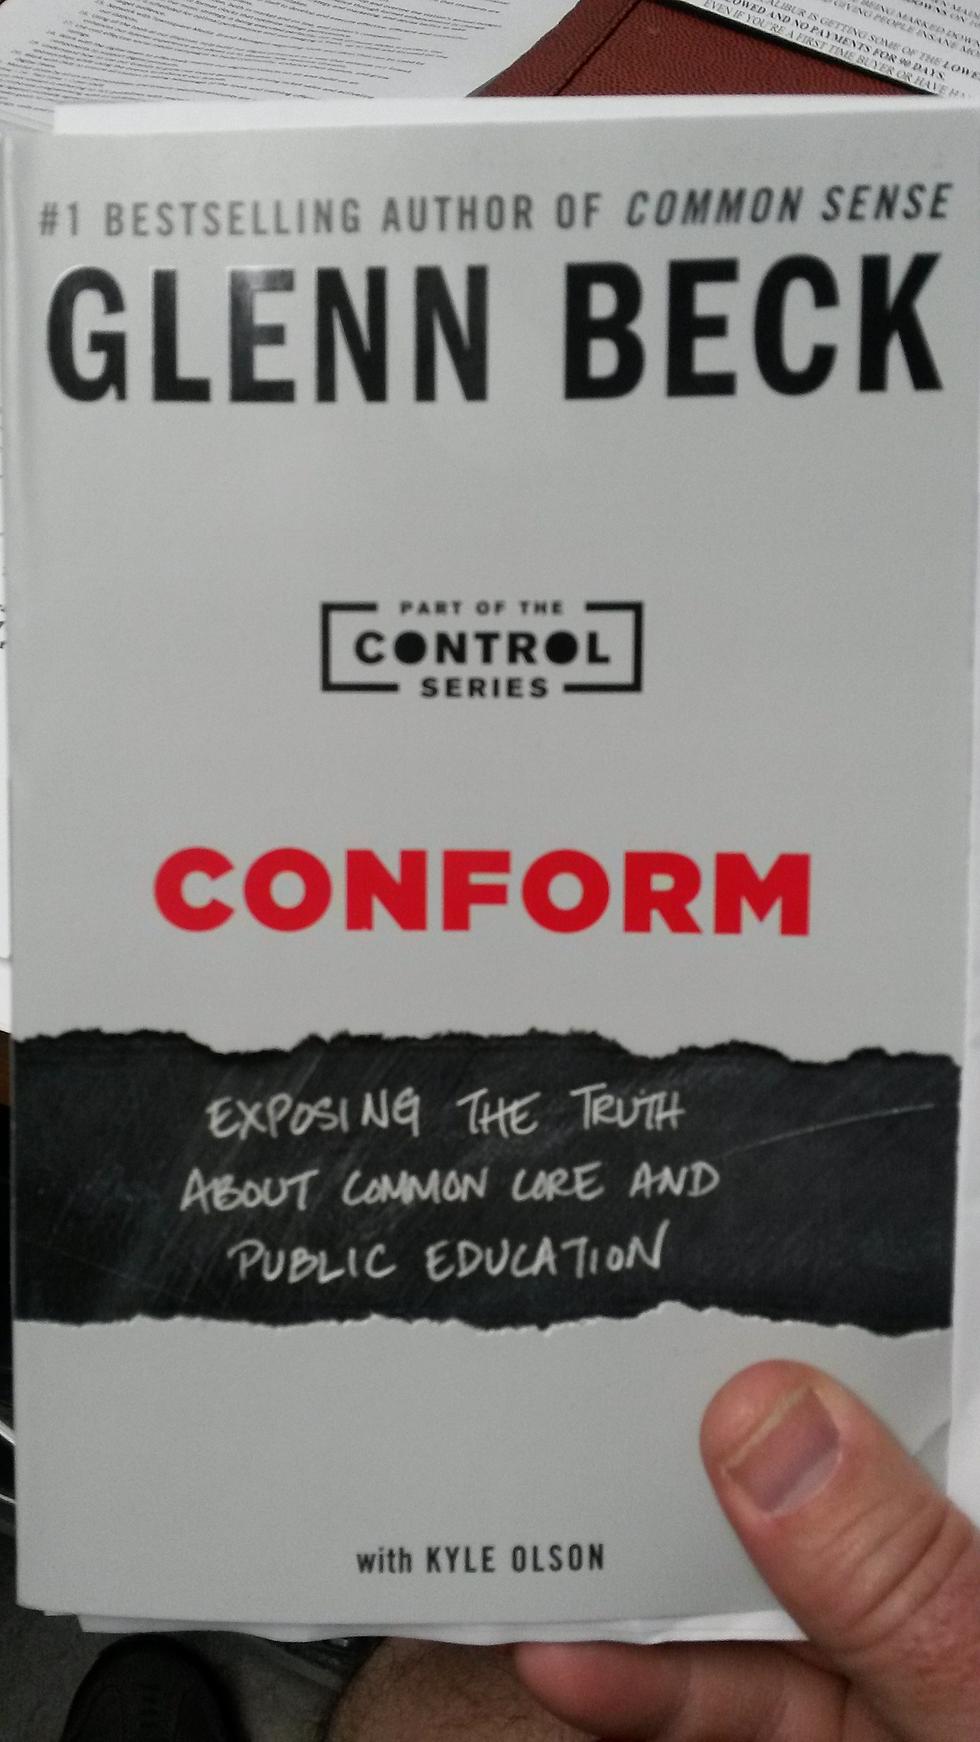 Win the New Glenn Beck Book “Conform” If You’re a Newstalk Newsmember VIP!